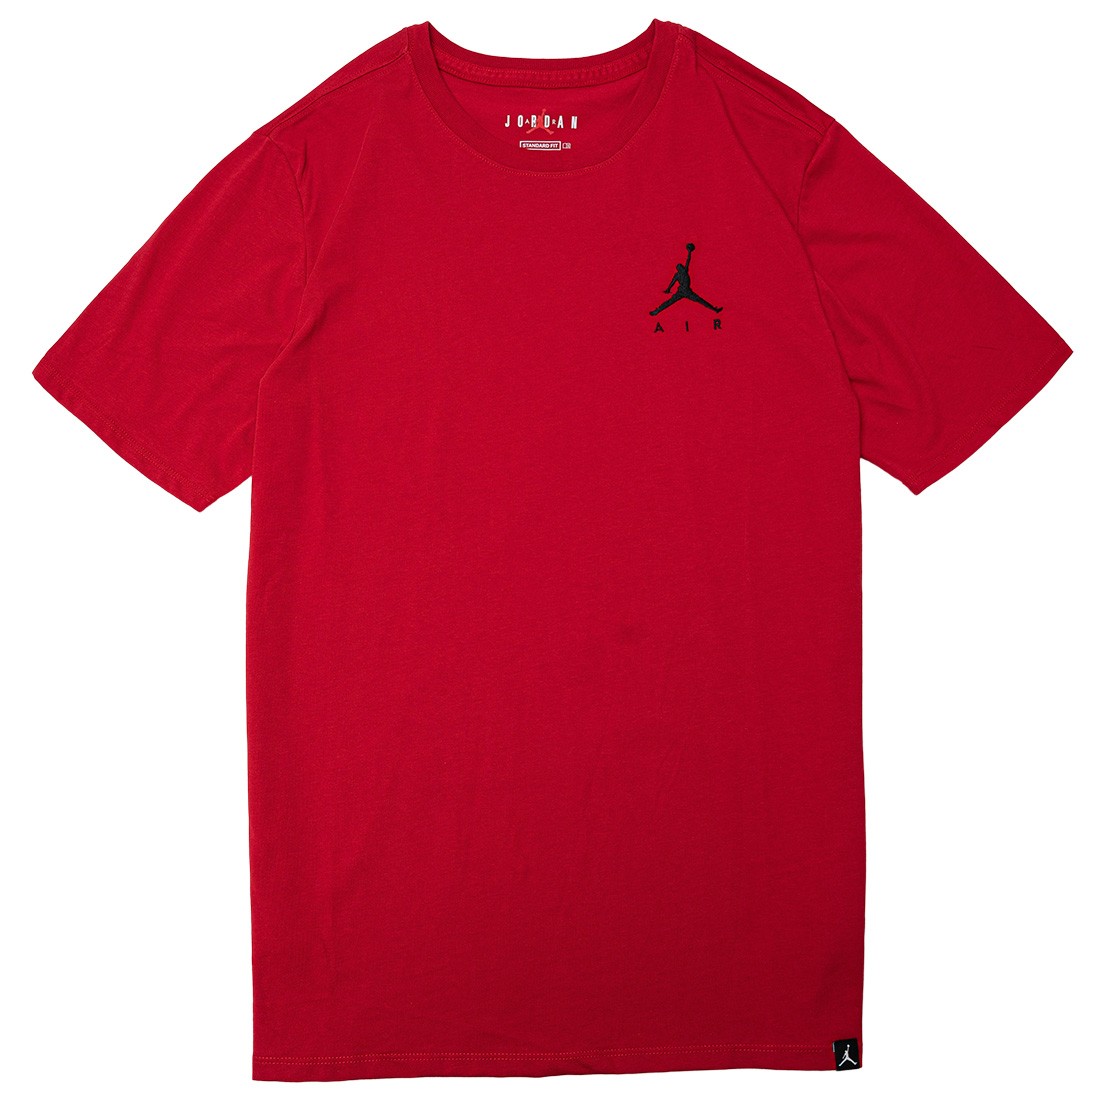 Nike Air Jordan Tee Men (Black / Gym Red)